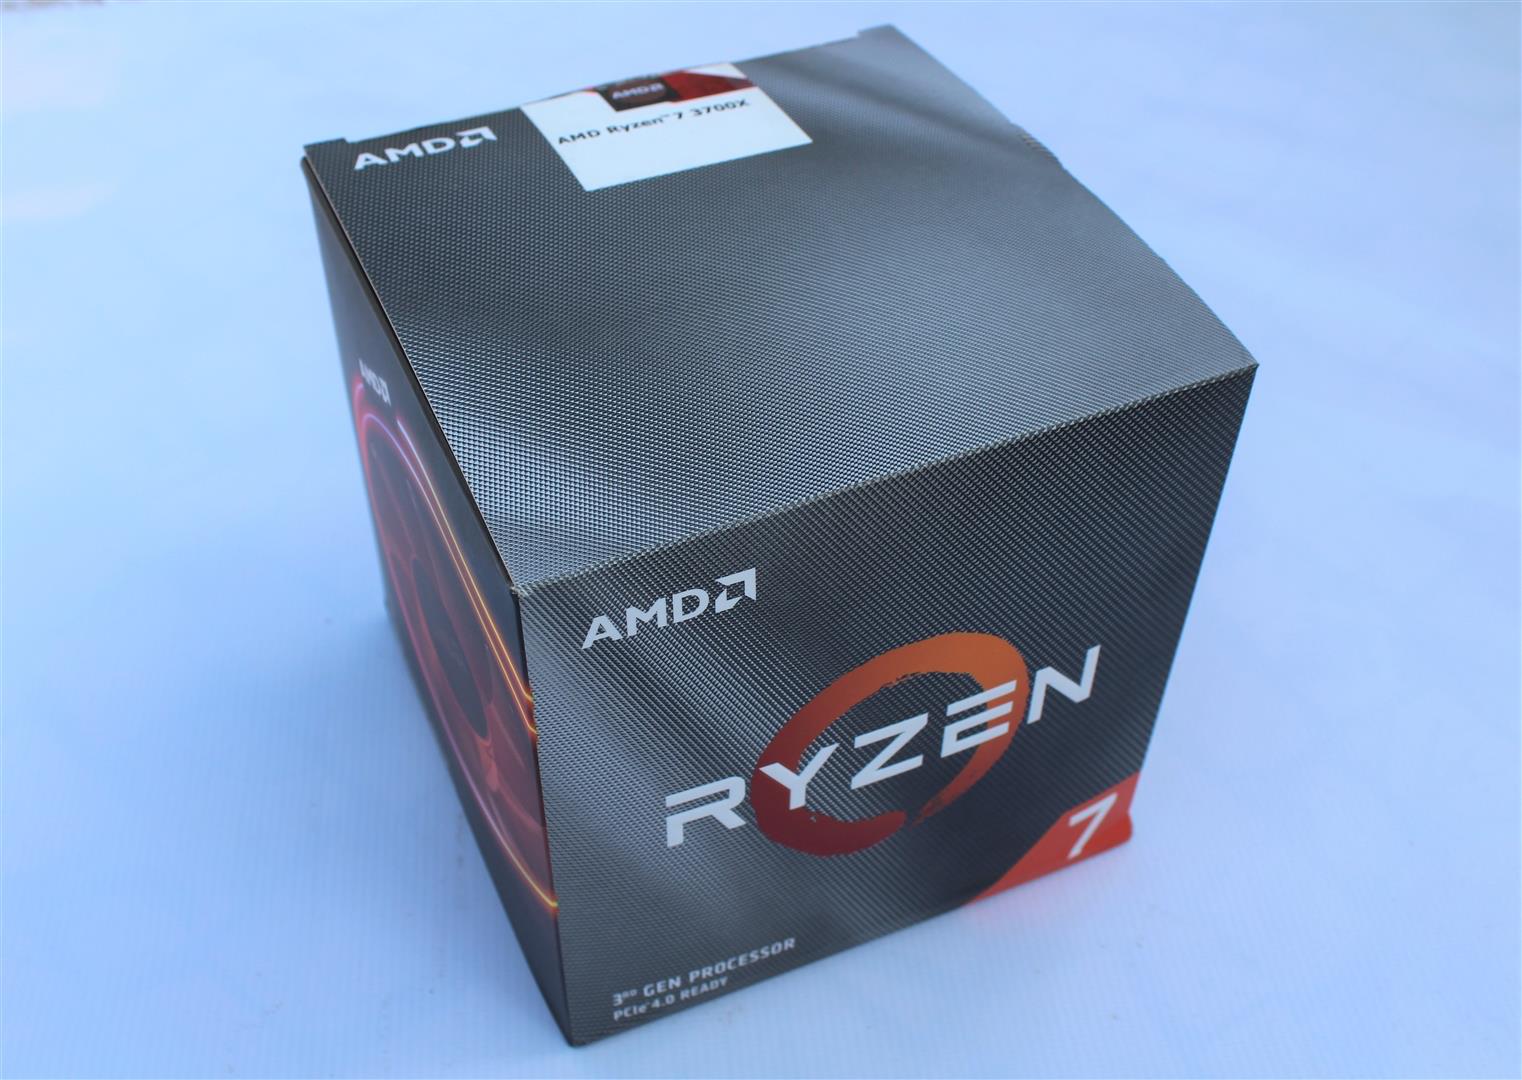 AMD Ryzen 7 3700X Processor Review